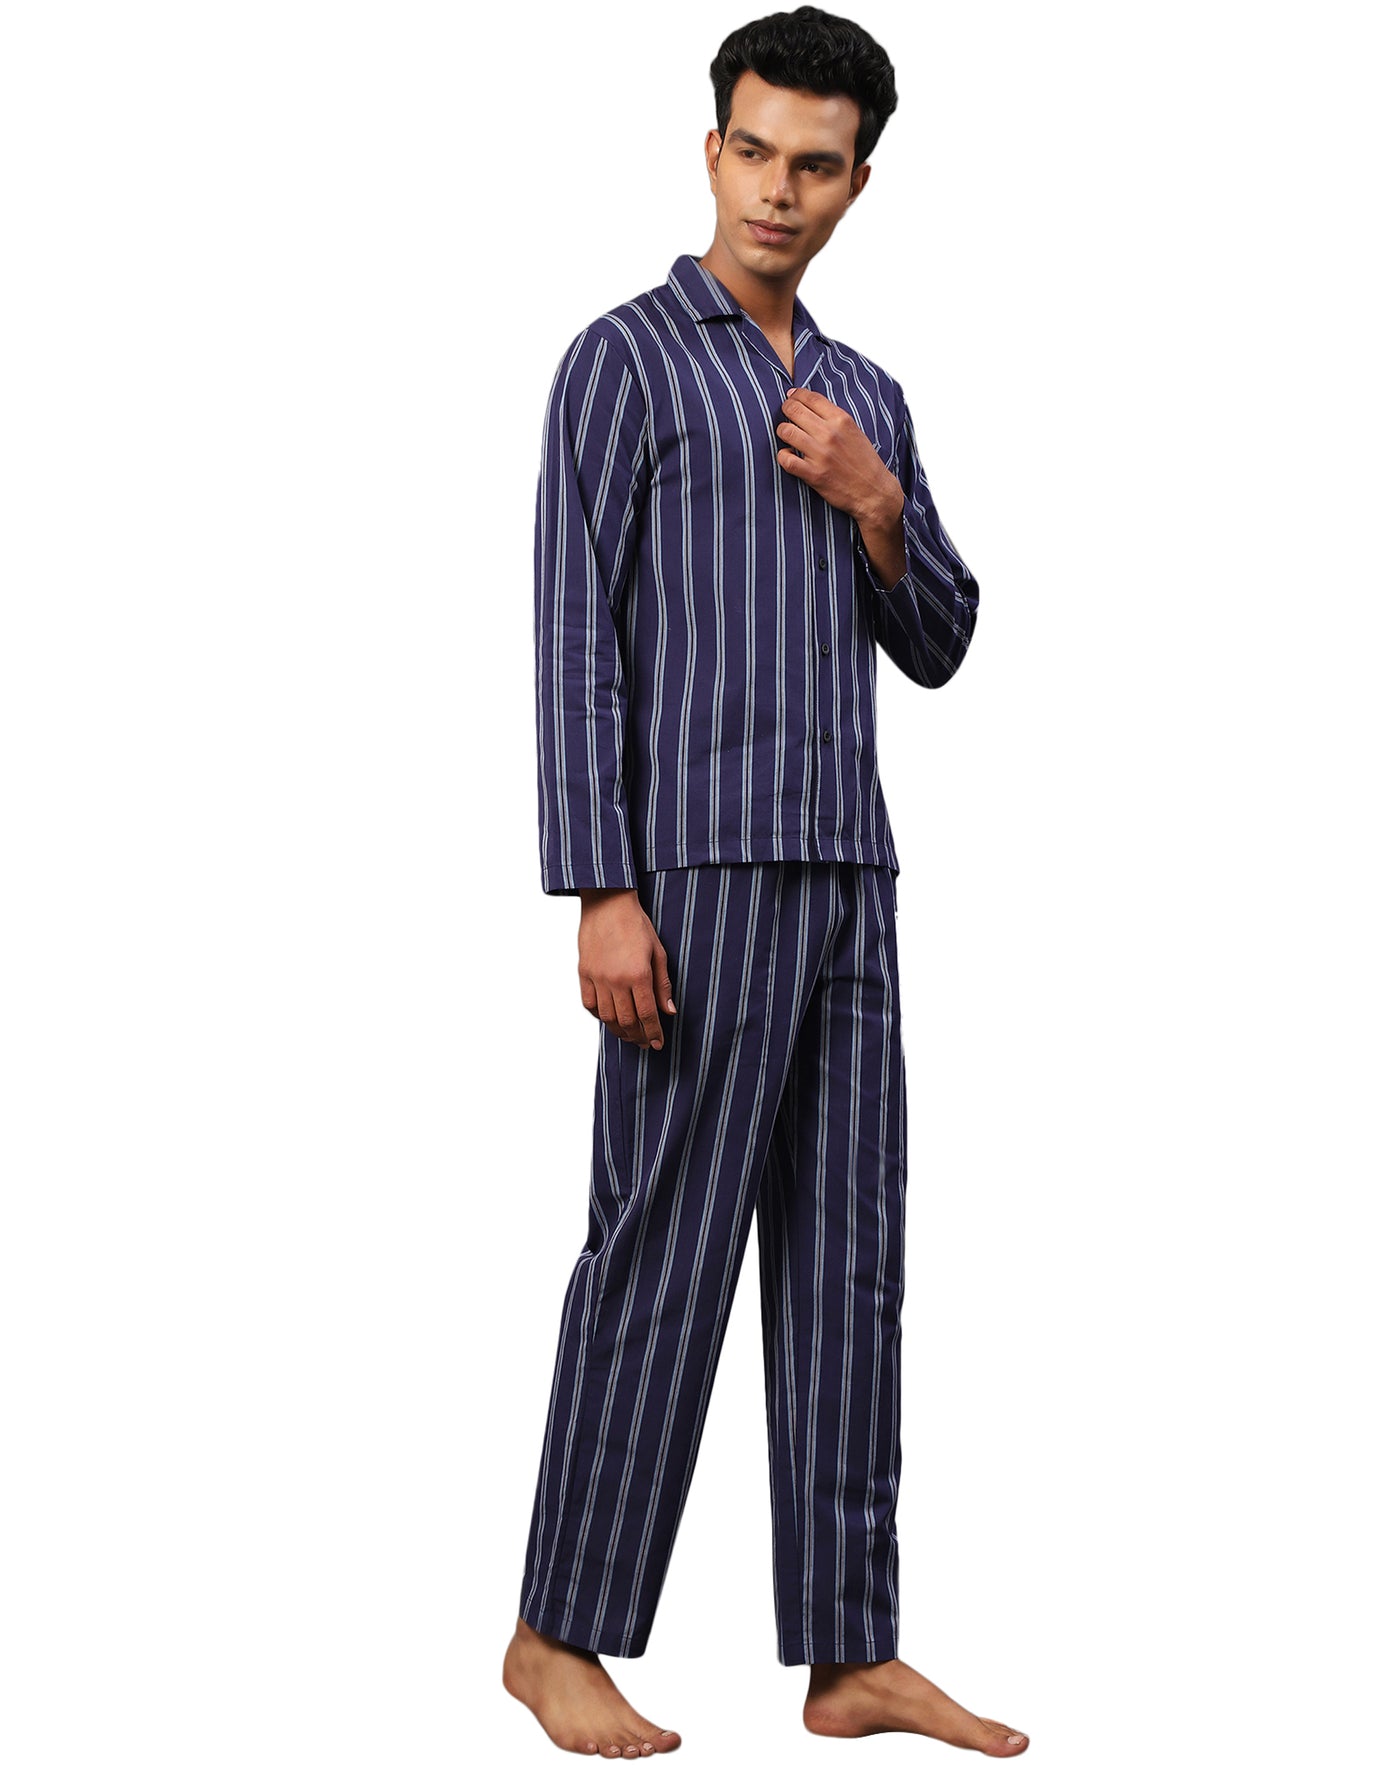 Pyjama Set for Men-Navy Blue Chalk Stripes